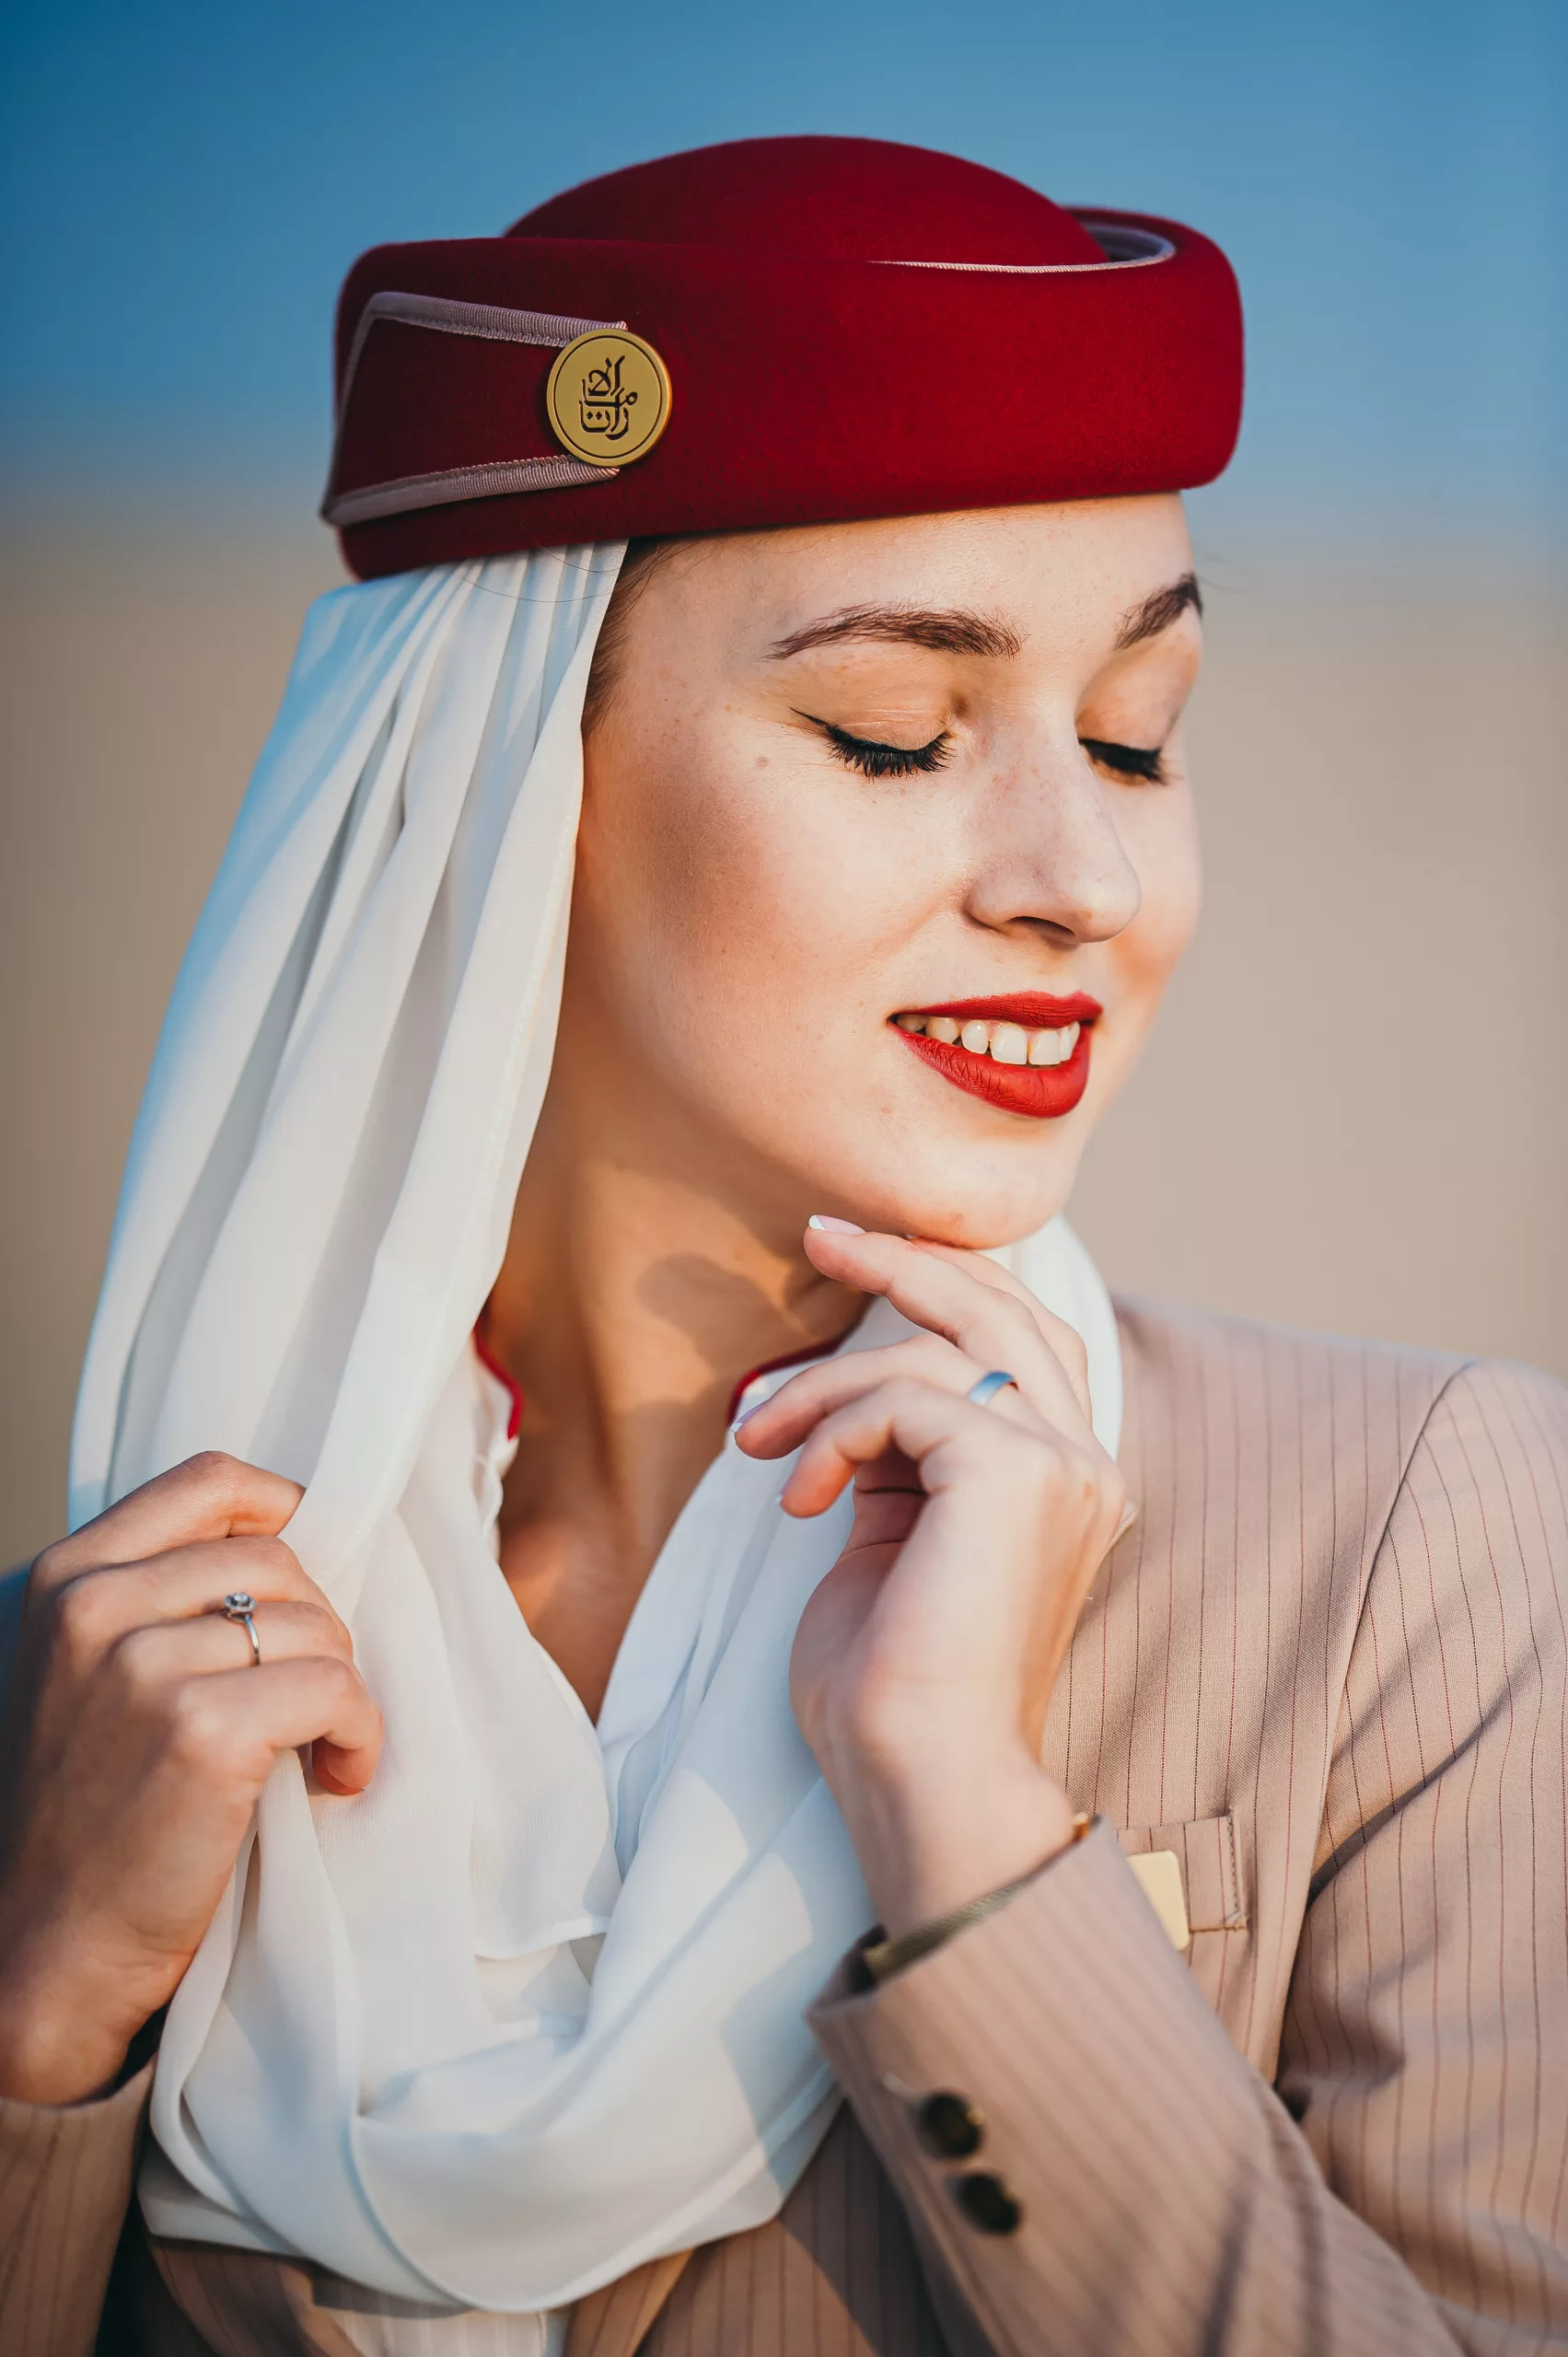 Emirates crew photoshoot - female photoshoots - Dubai Photography - Portraits Dubai - www.Imagin8.ae